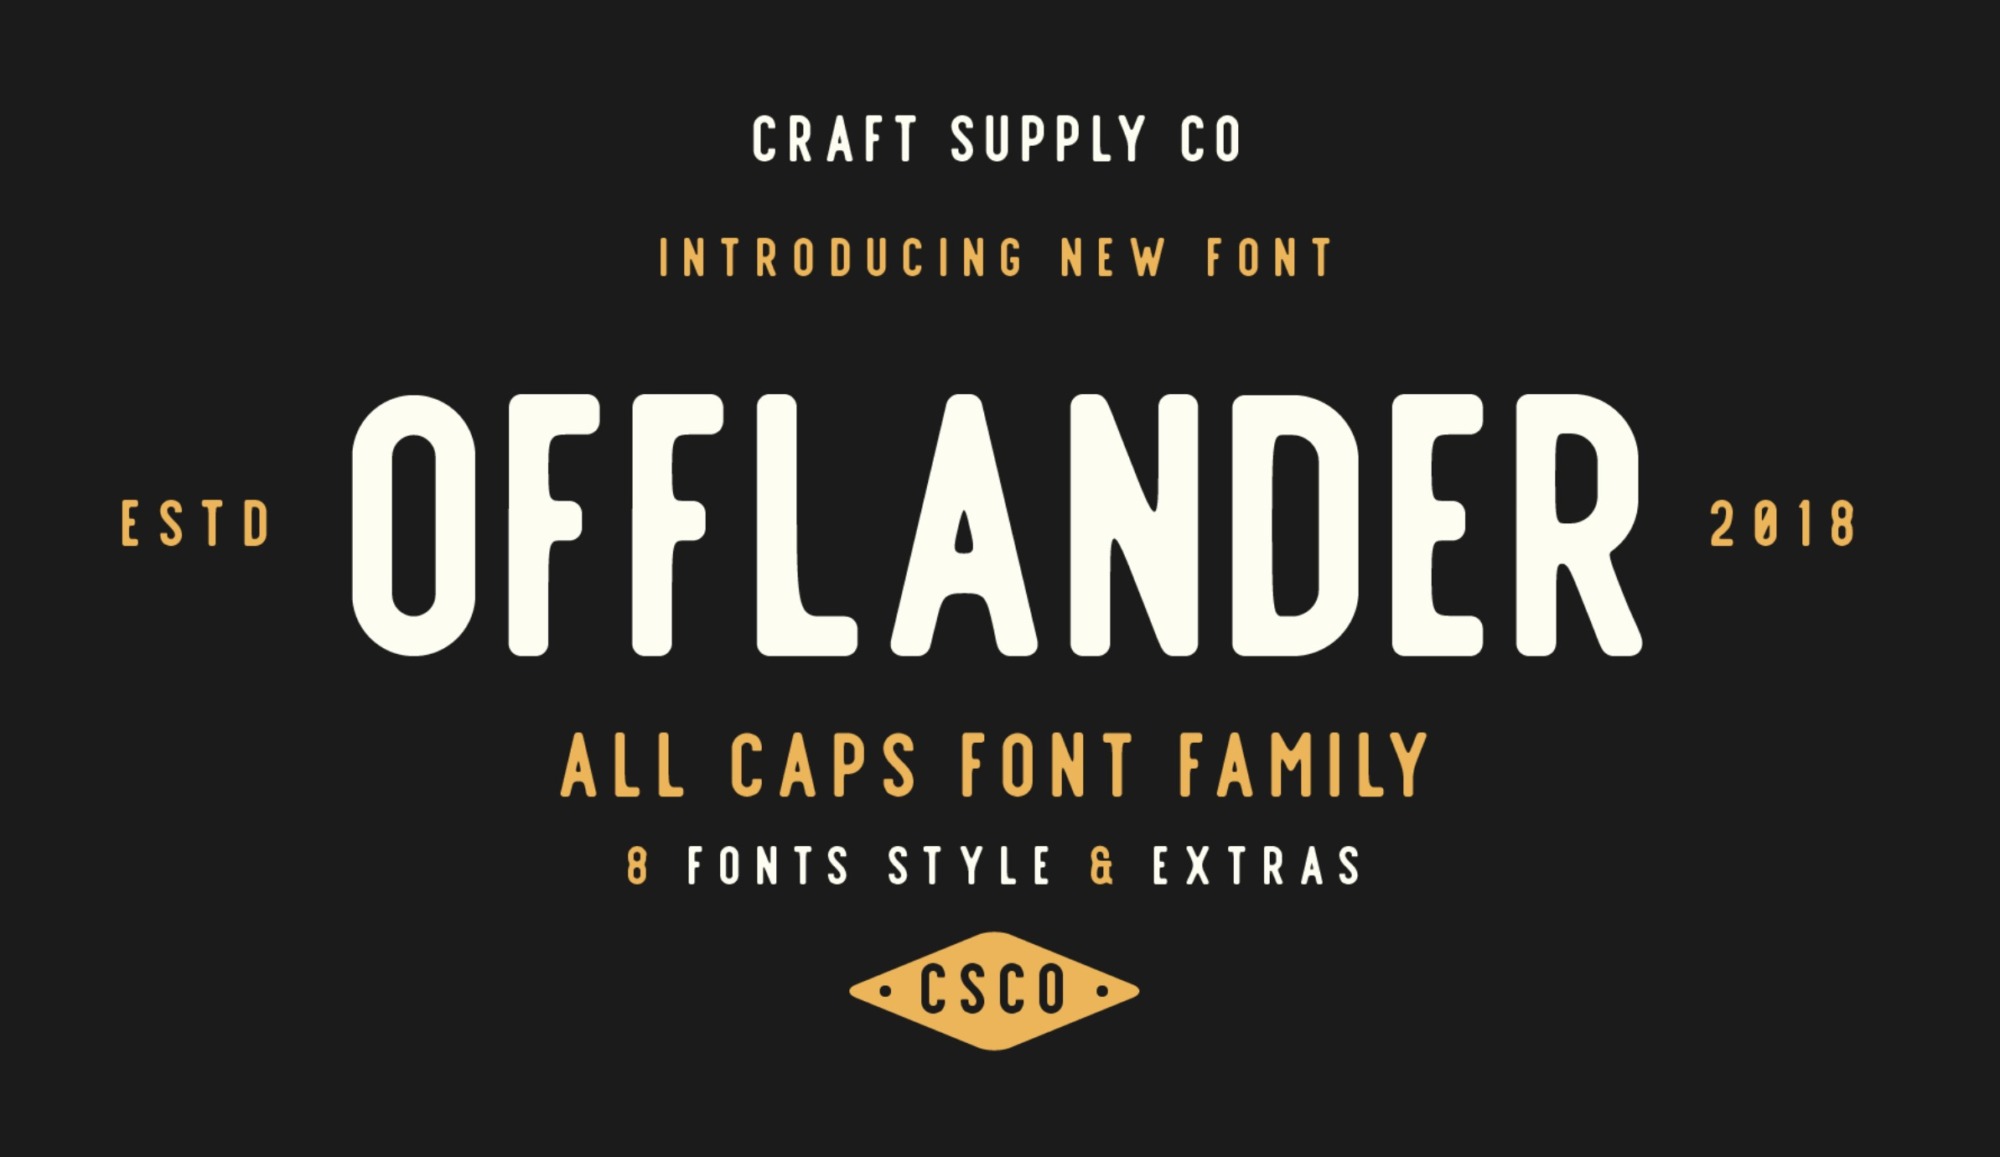 Offlander Rough - Free Vintage All Caps Font